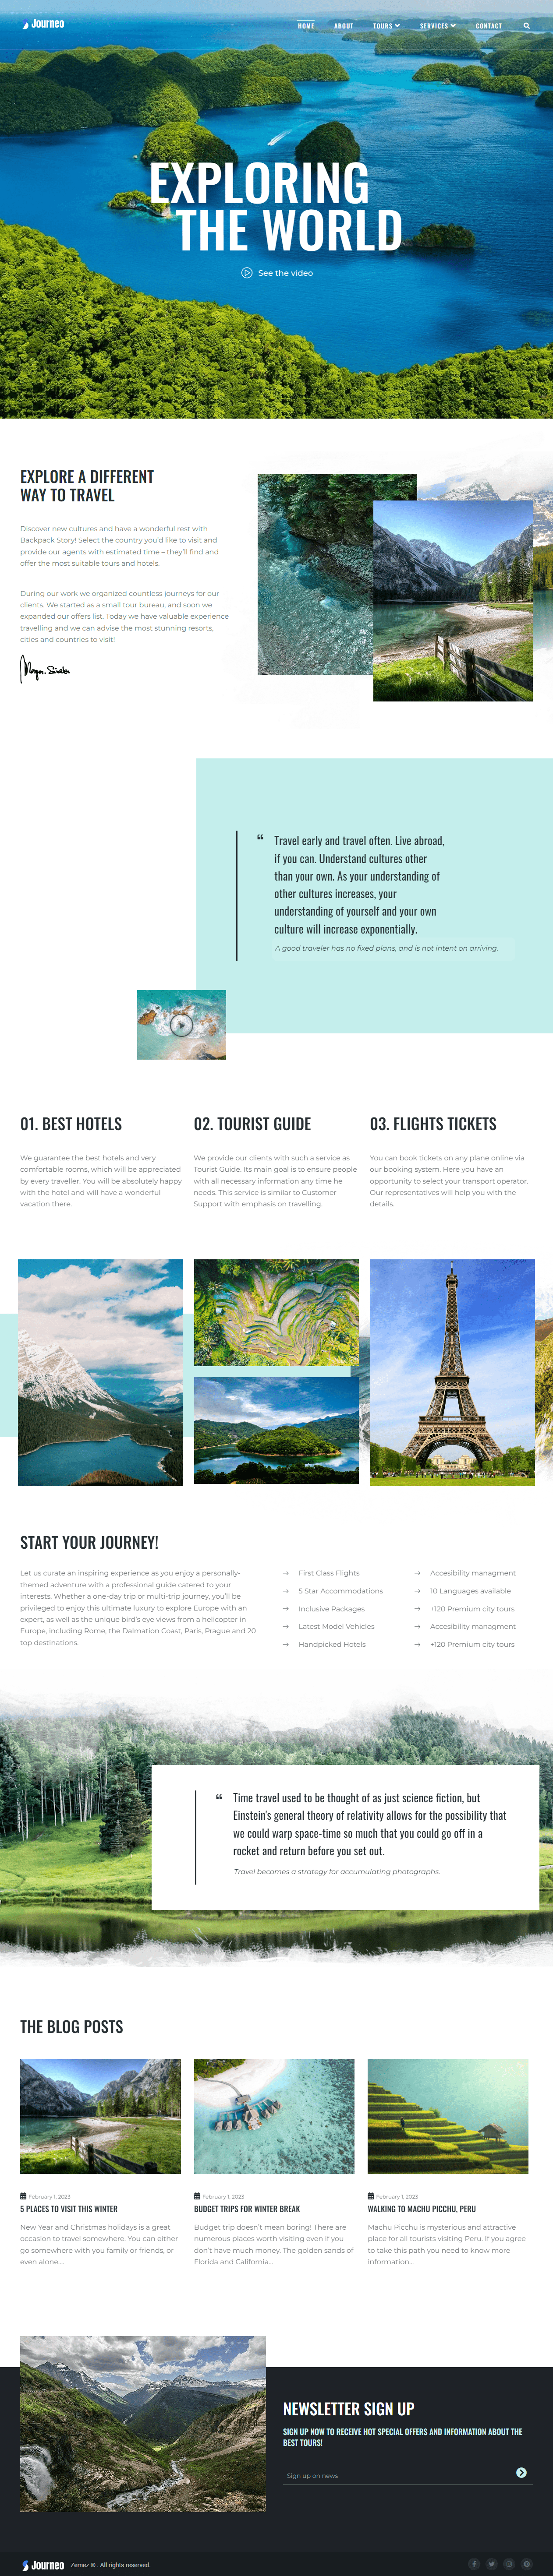 Travel-website-template-1